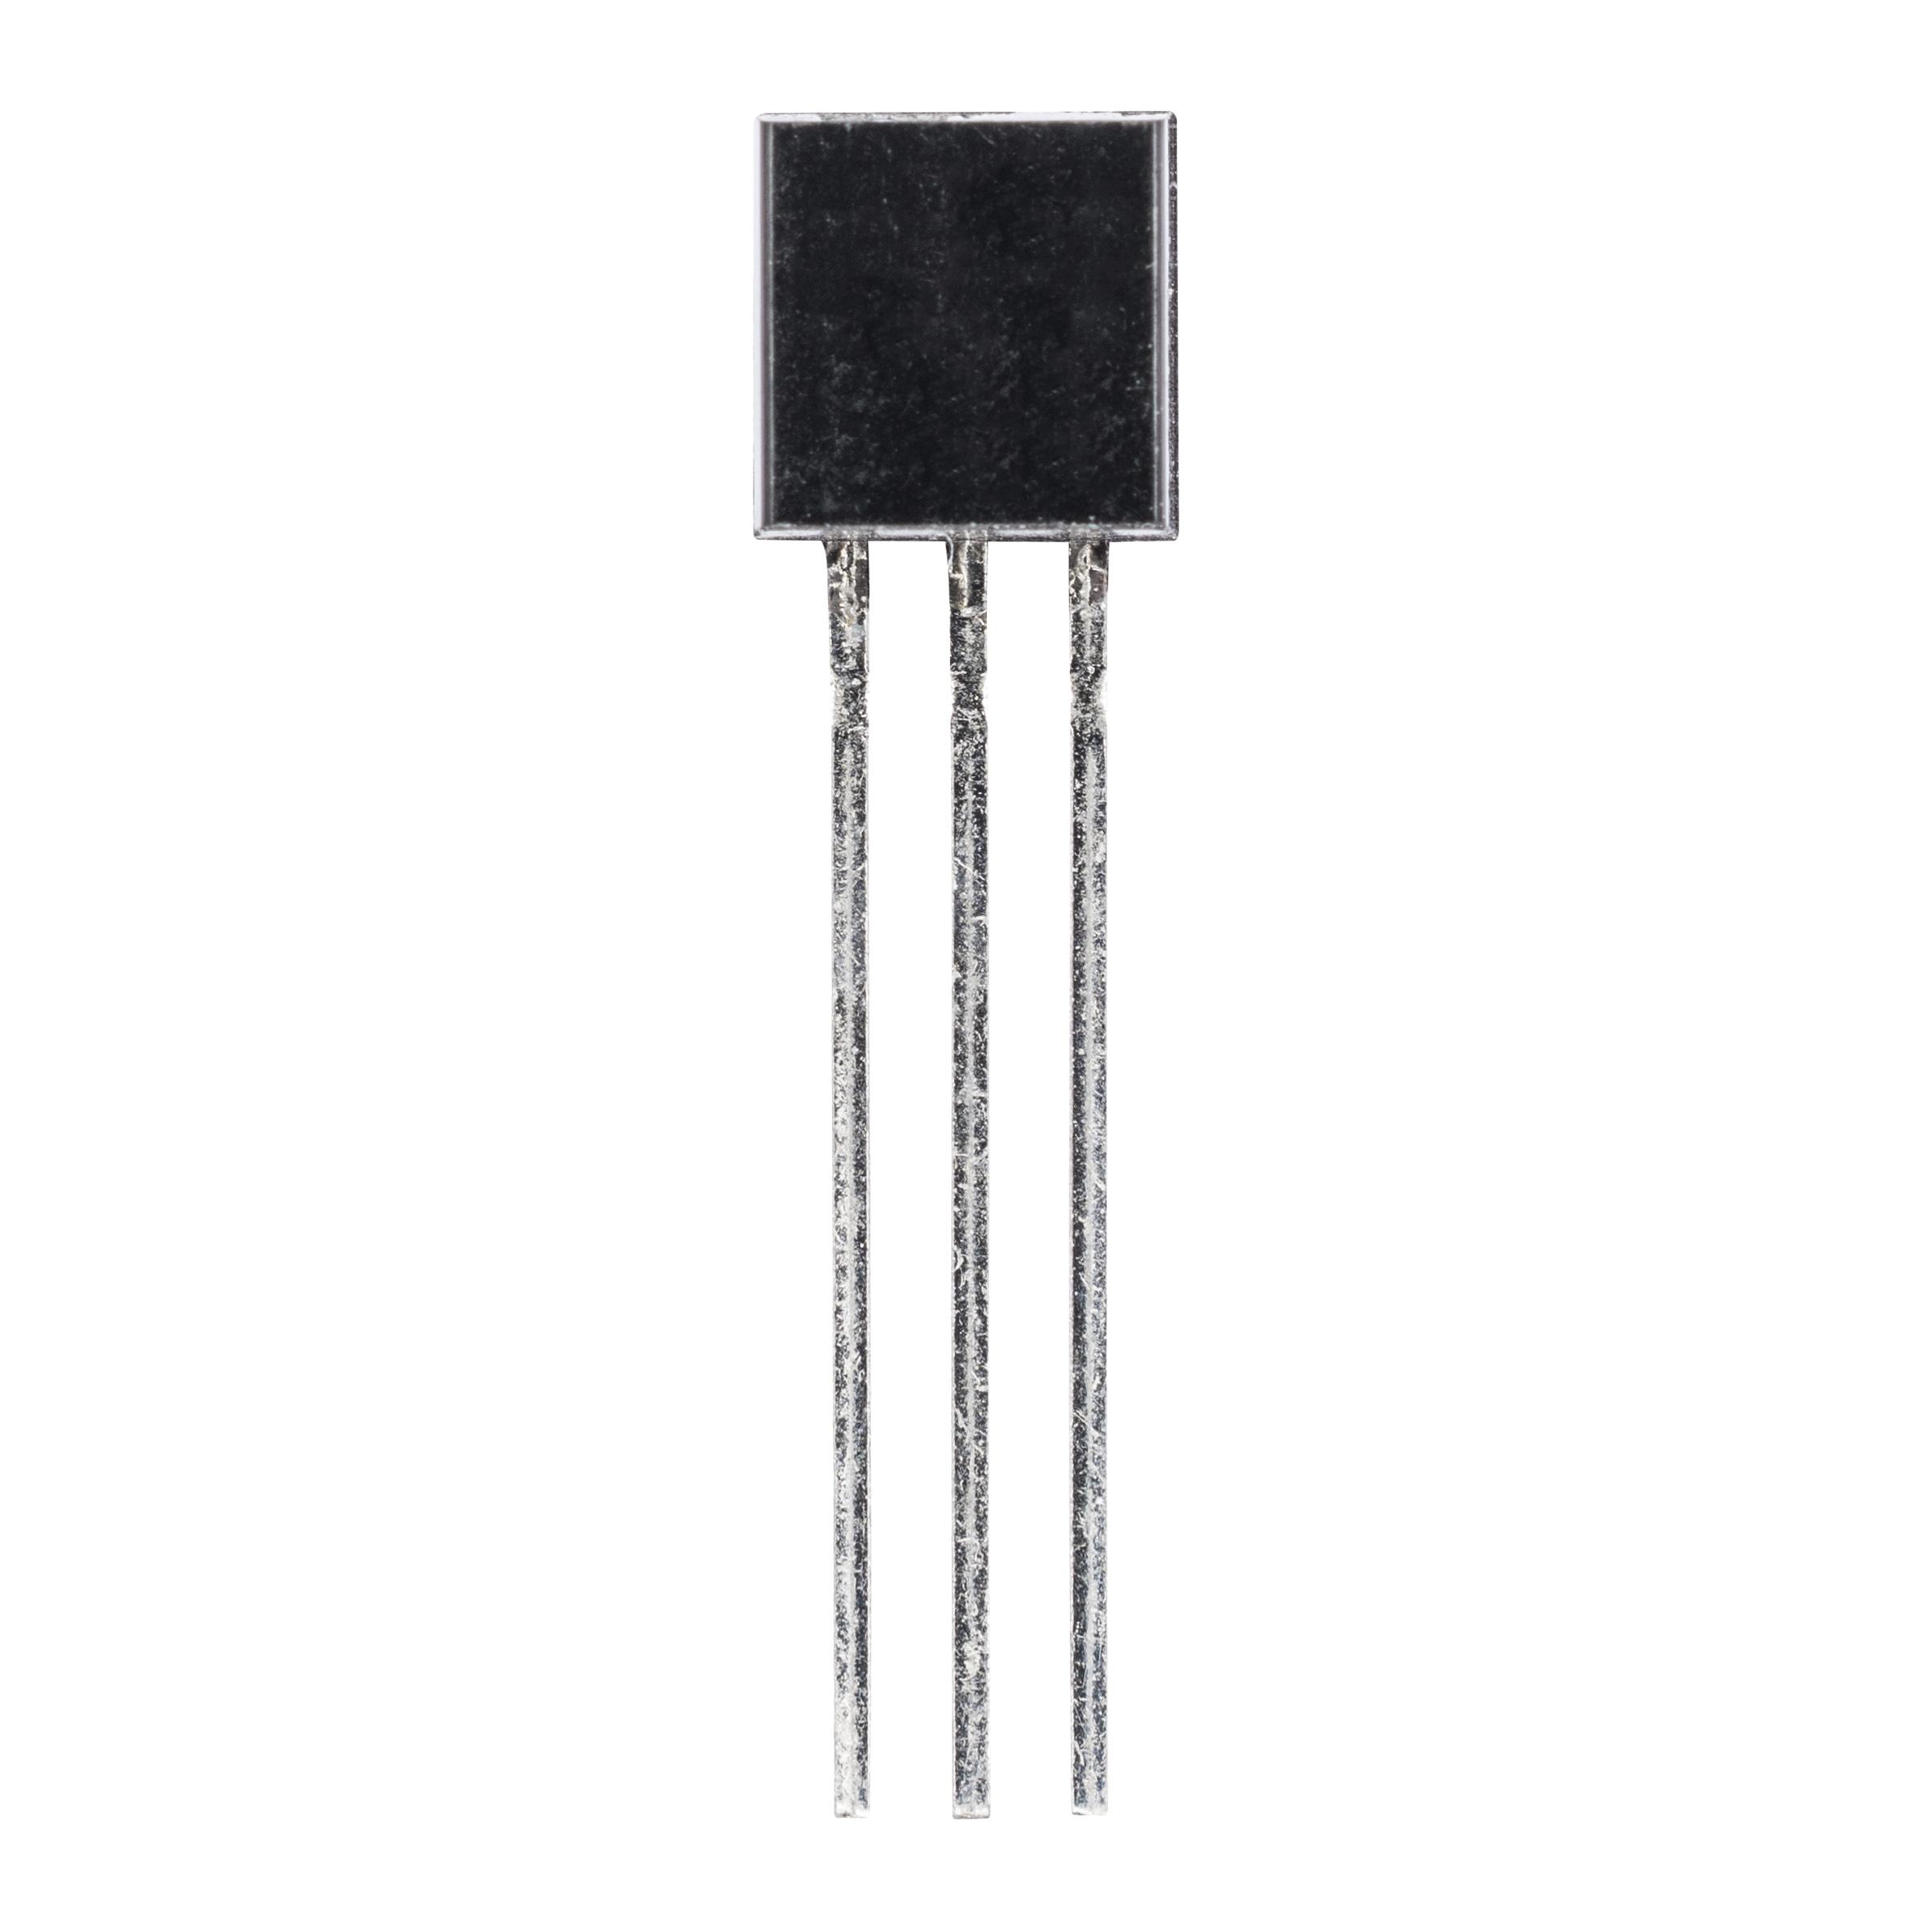 BF393 (Bipolartransistor NPN)